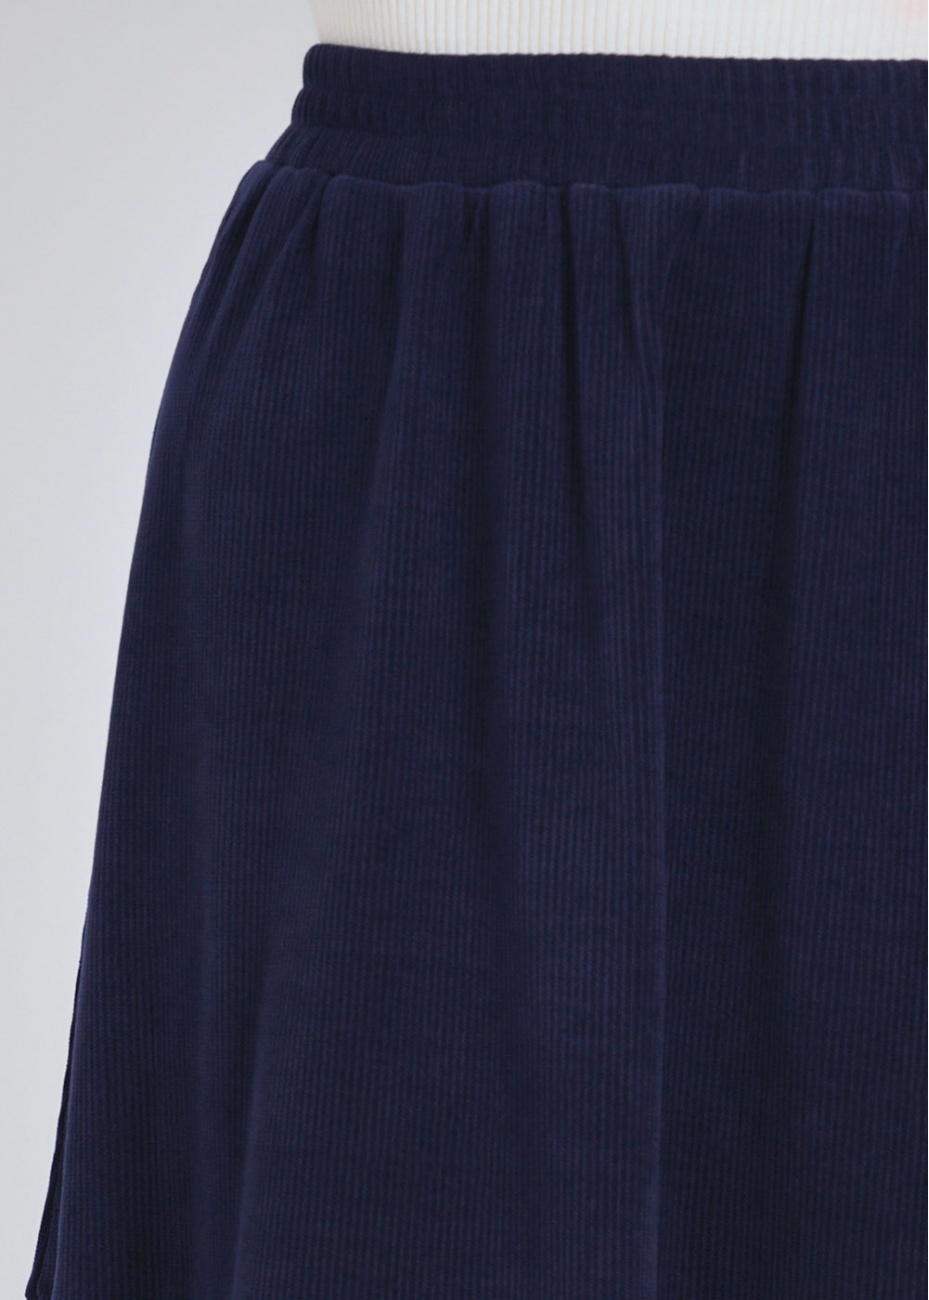 Navy Harmony: Dual Design Midi Skirt